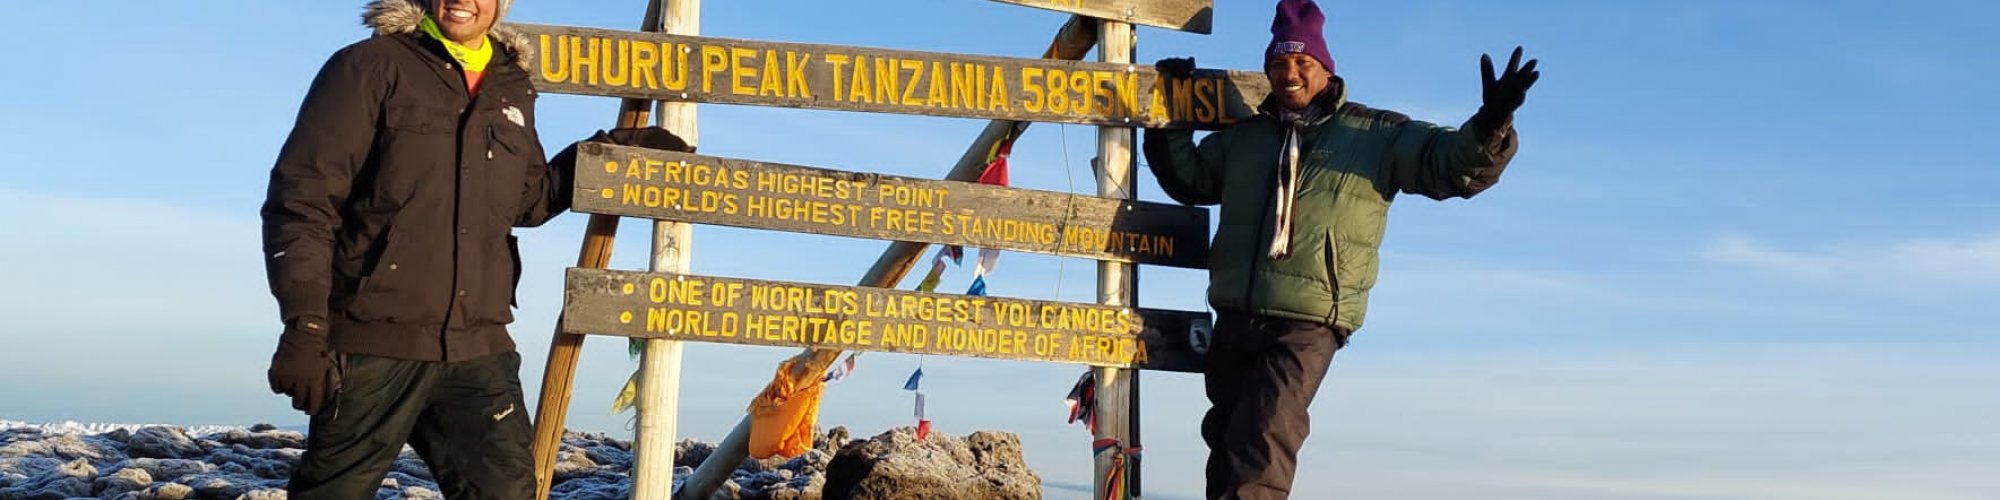 AFRICA NATURAL SAFARIS - Best Tanzania Migration Safari | Kilimanjaro Hiking Tour Operator